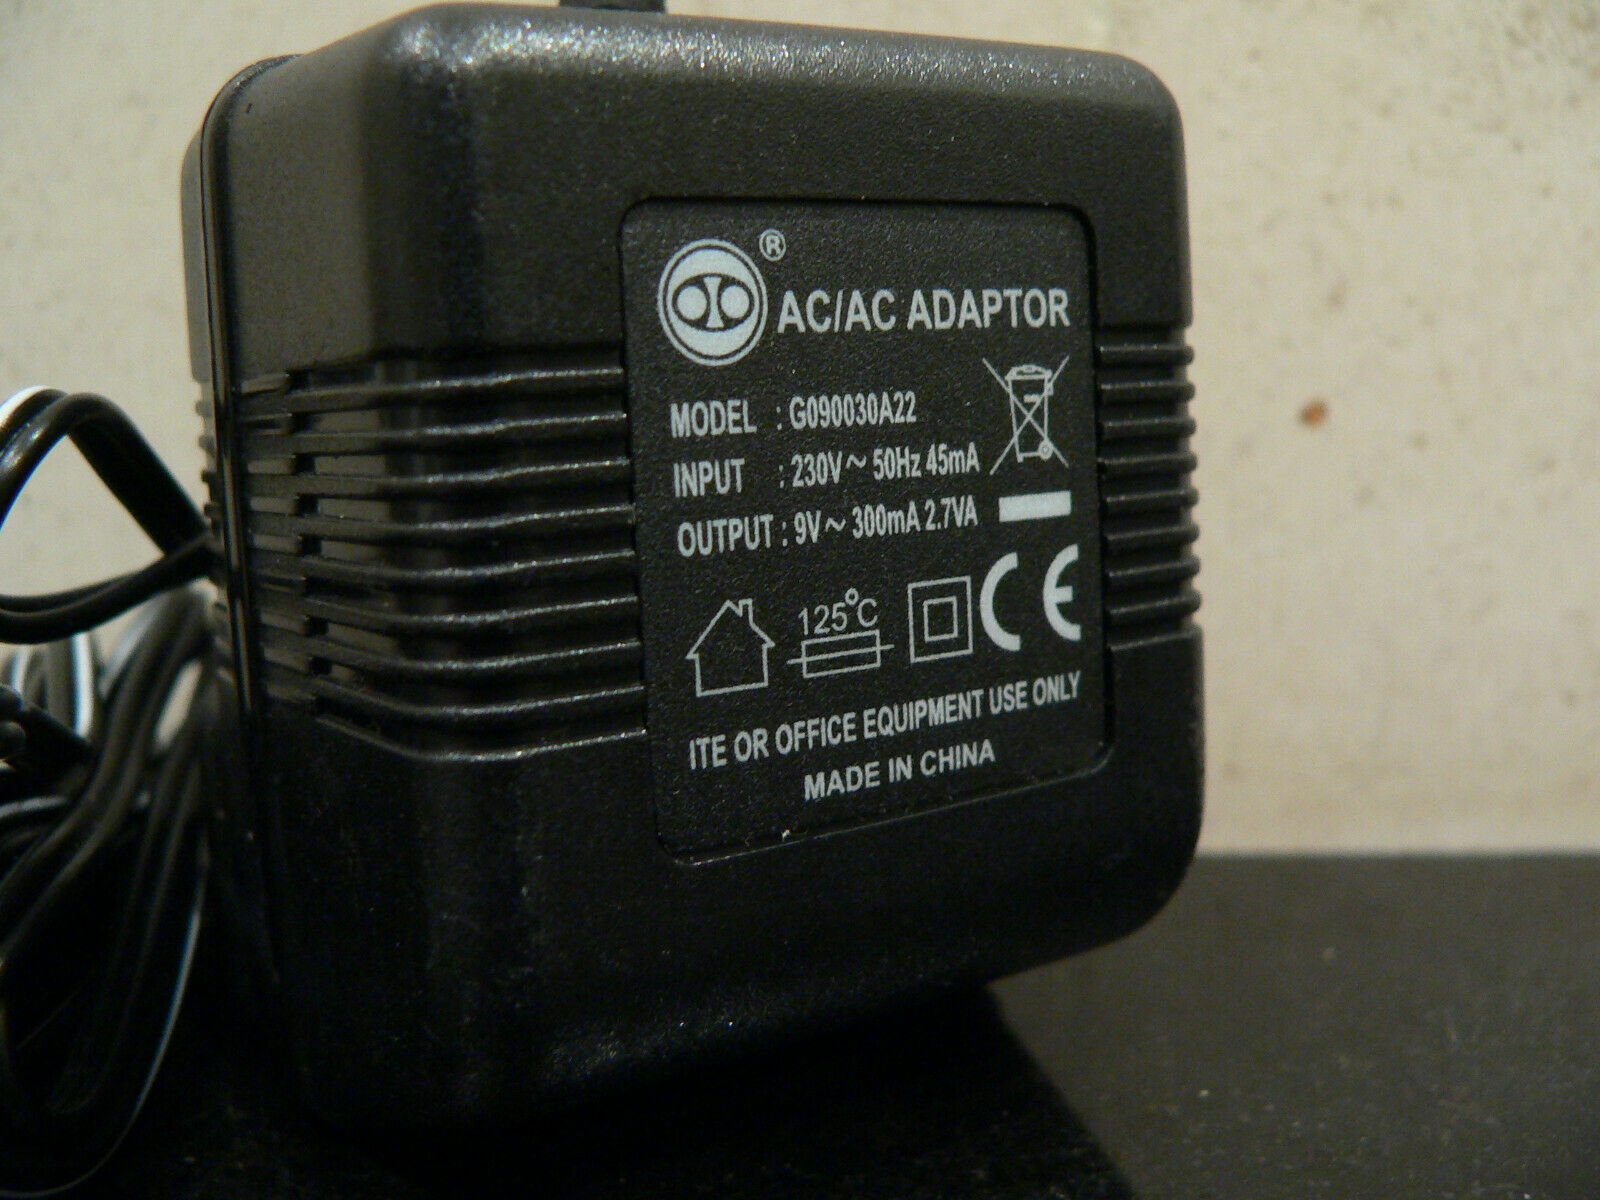 BT AC/AC adapter G090030A22 027300 9V 300mA 2.7VA Plug Adaptor PSU Power Supply"Five-Star"! Country/Region of Manufact